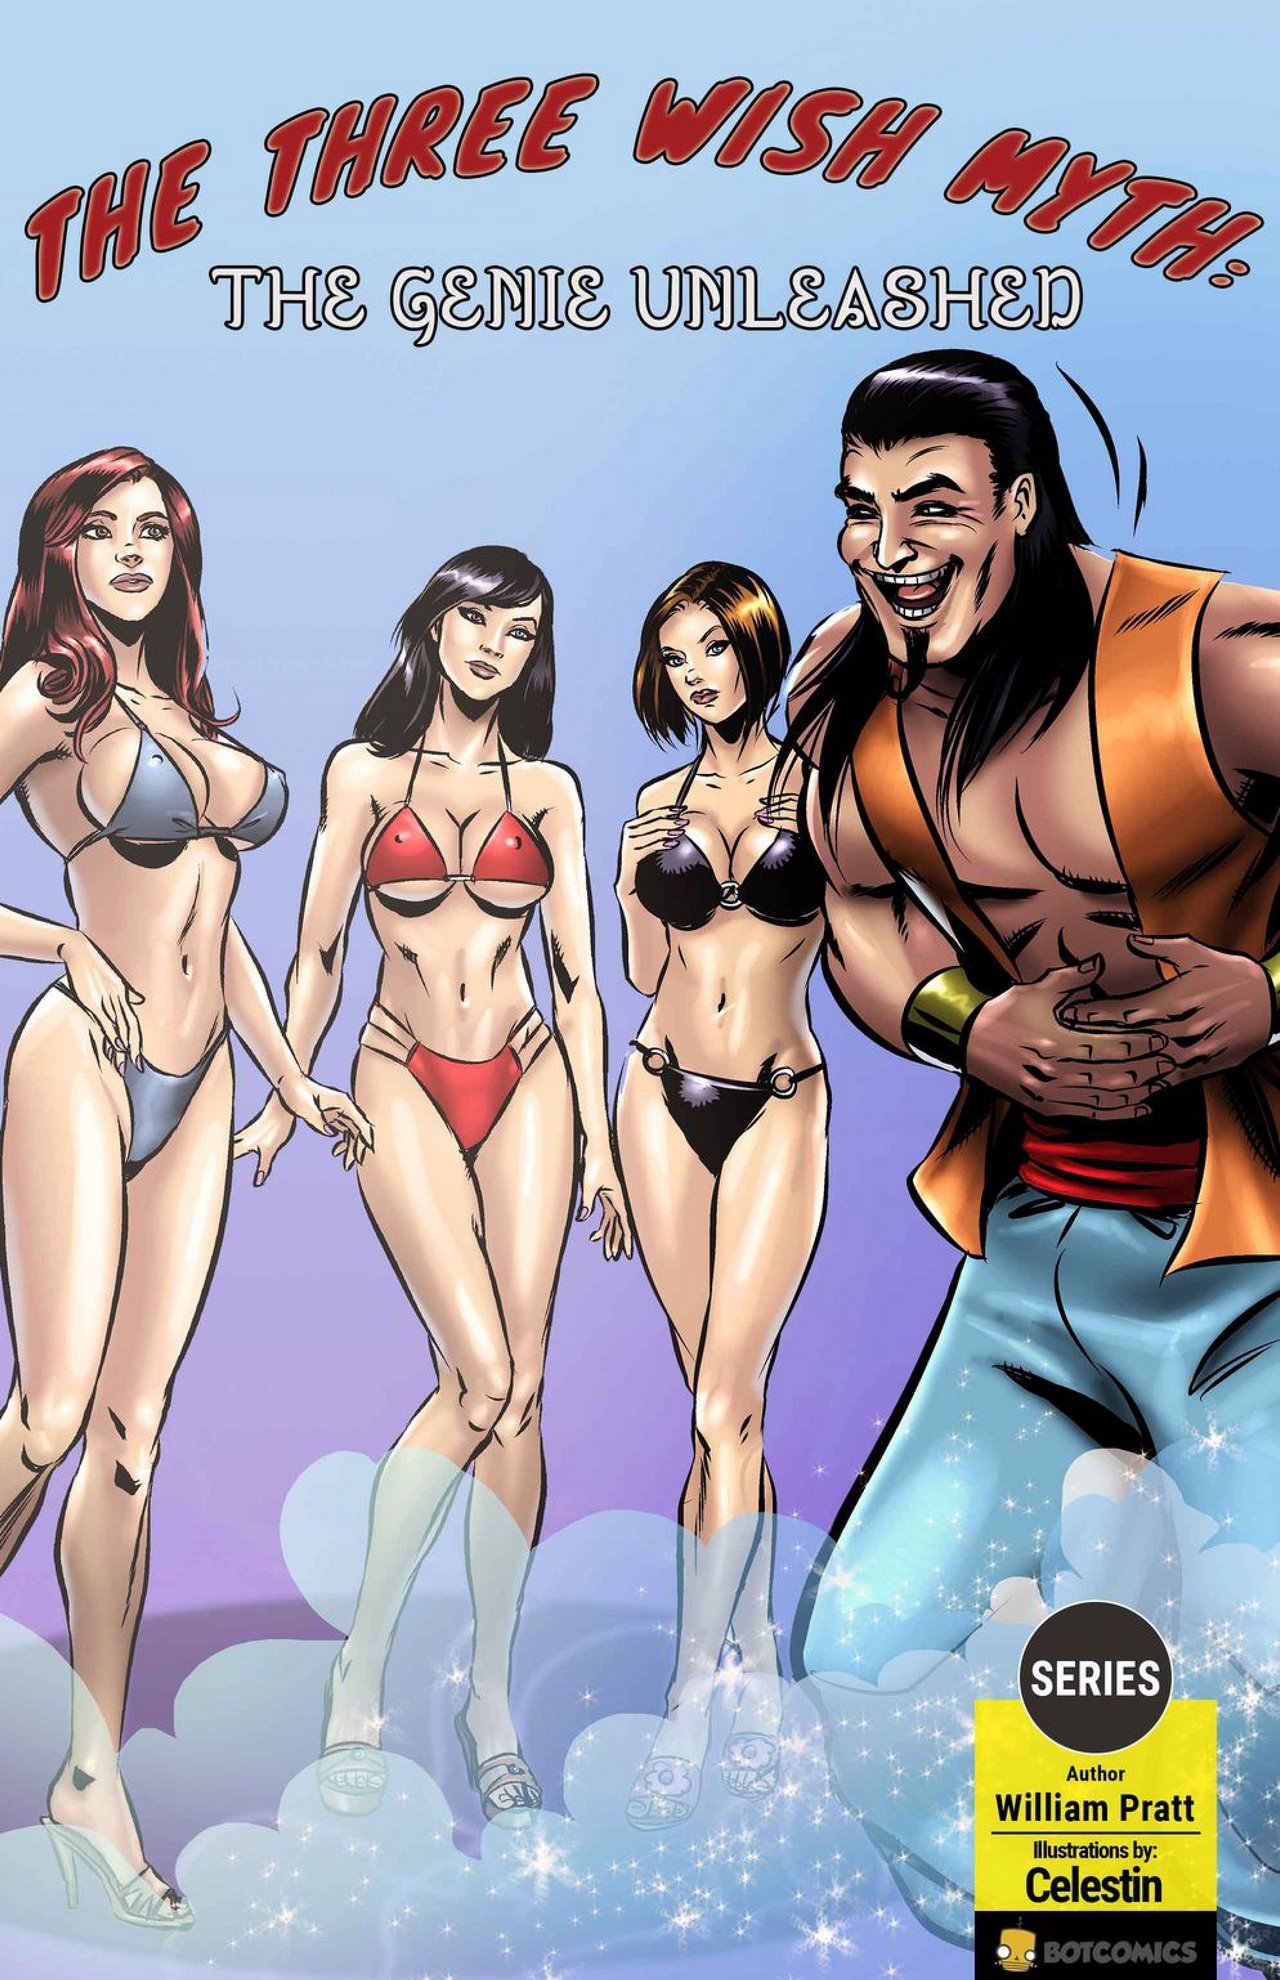 The Three Wish Myth porn comics. Breast expansion porn comics.